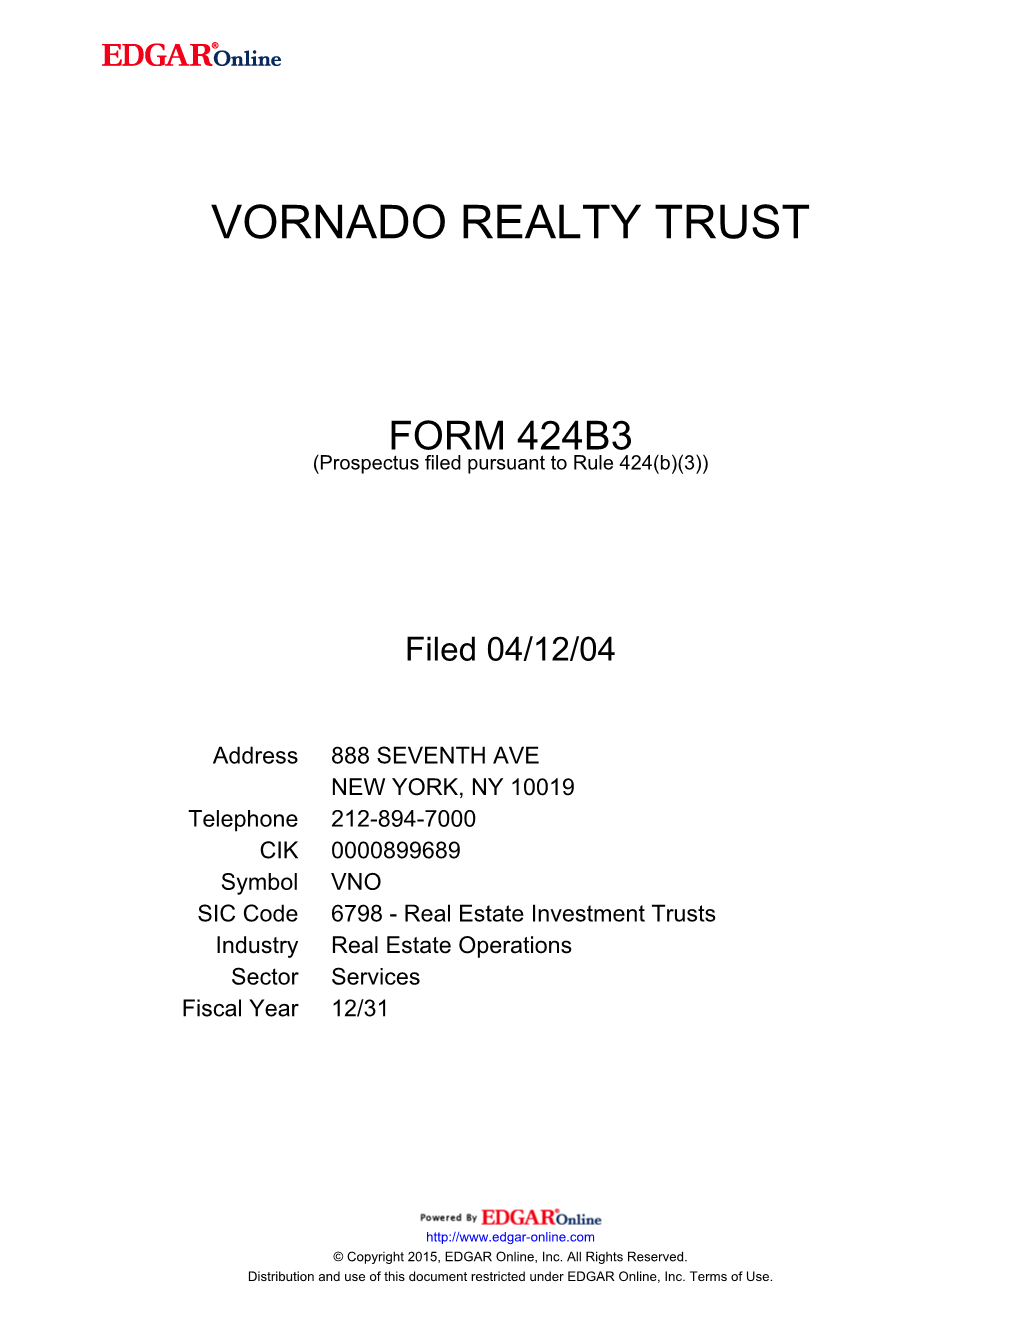 Vornado Realty Trust Form 424B3